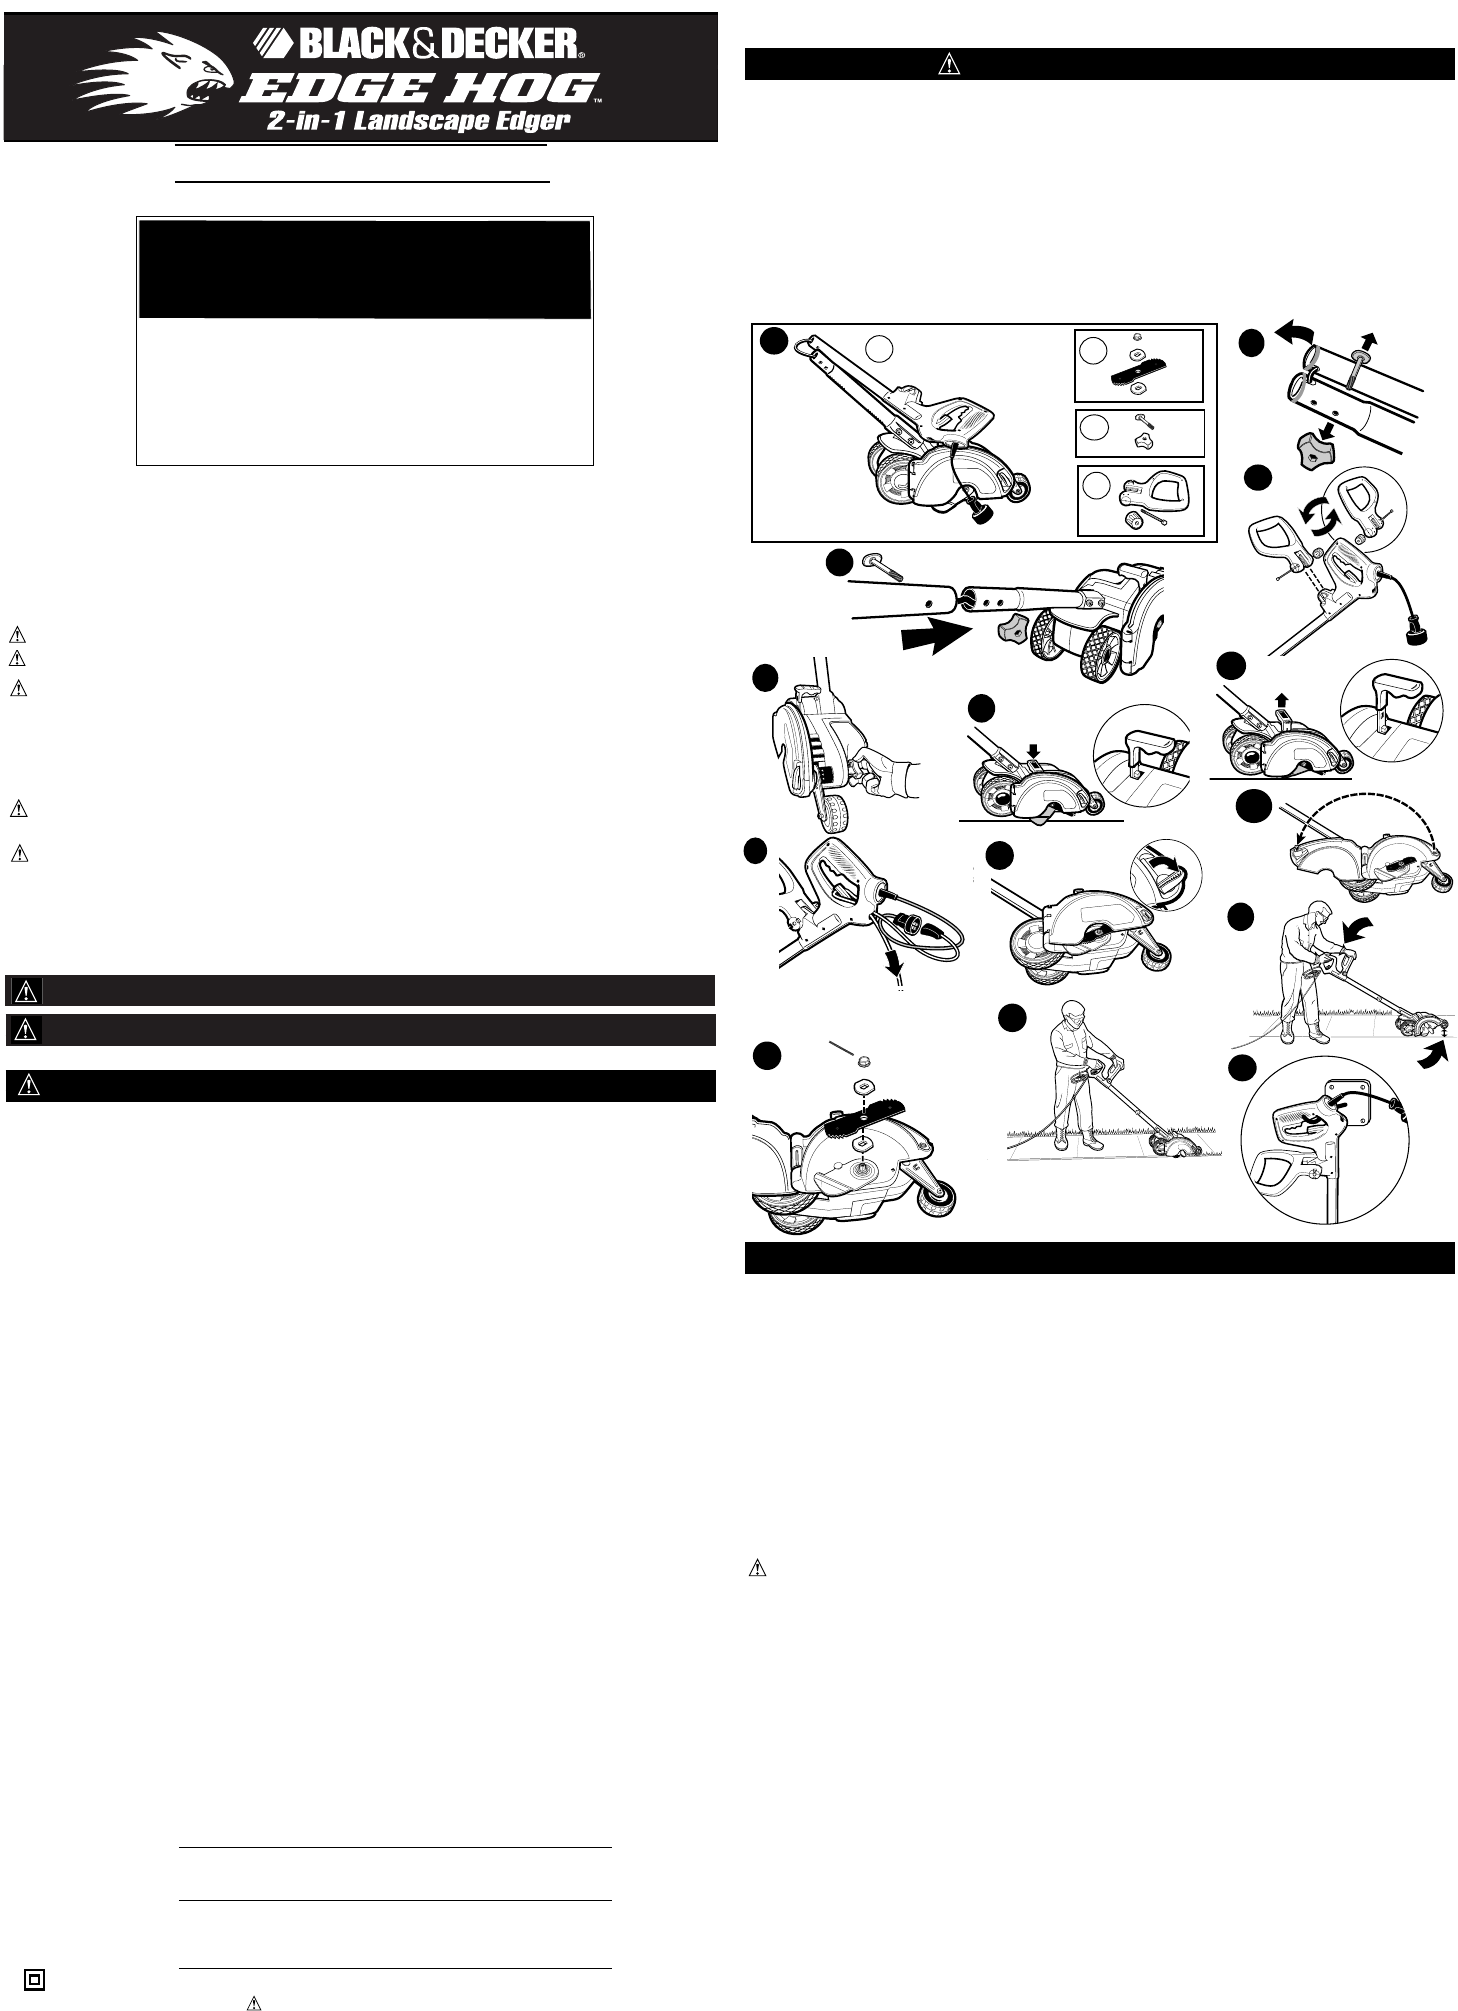 BLACKandDECKER LE750 EdgeHOG 2-in-1 Landscape Edger Instruction Manual